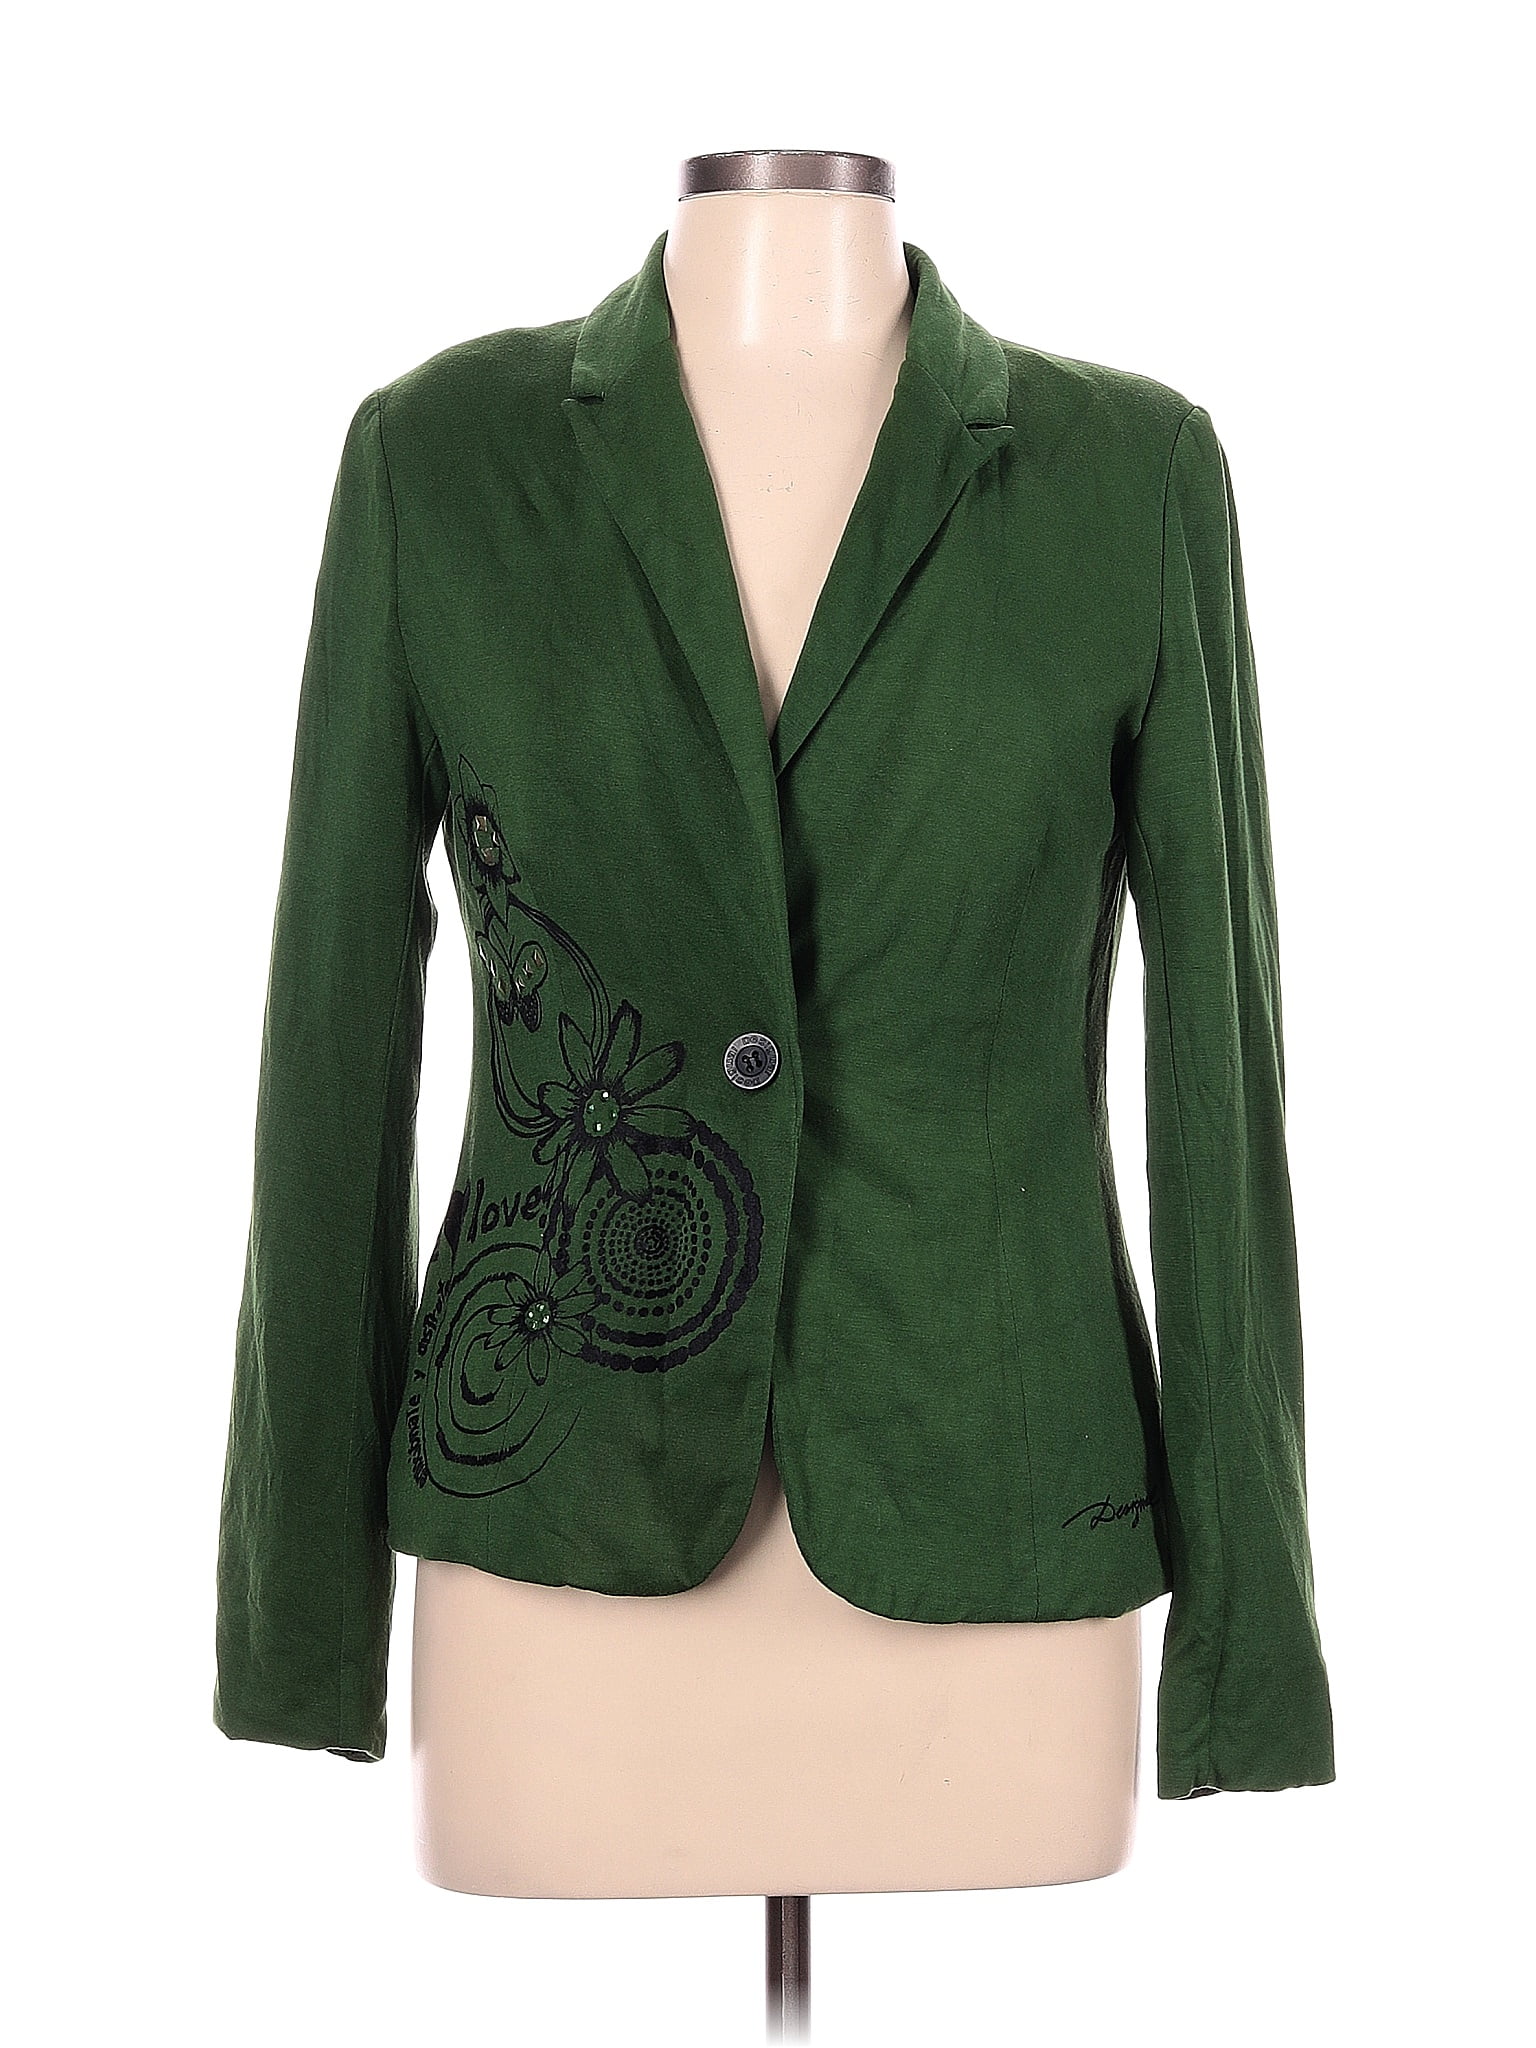 Desigual Solid Green Blazer Size 42 (EU) - 69% off | ThredUp